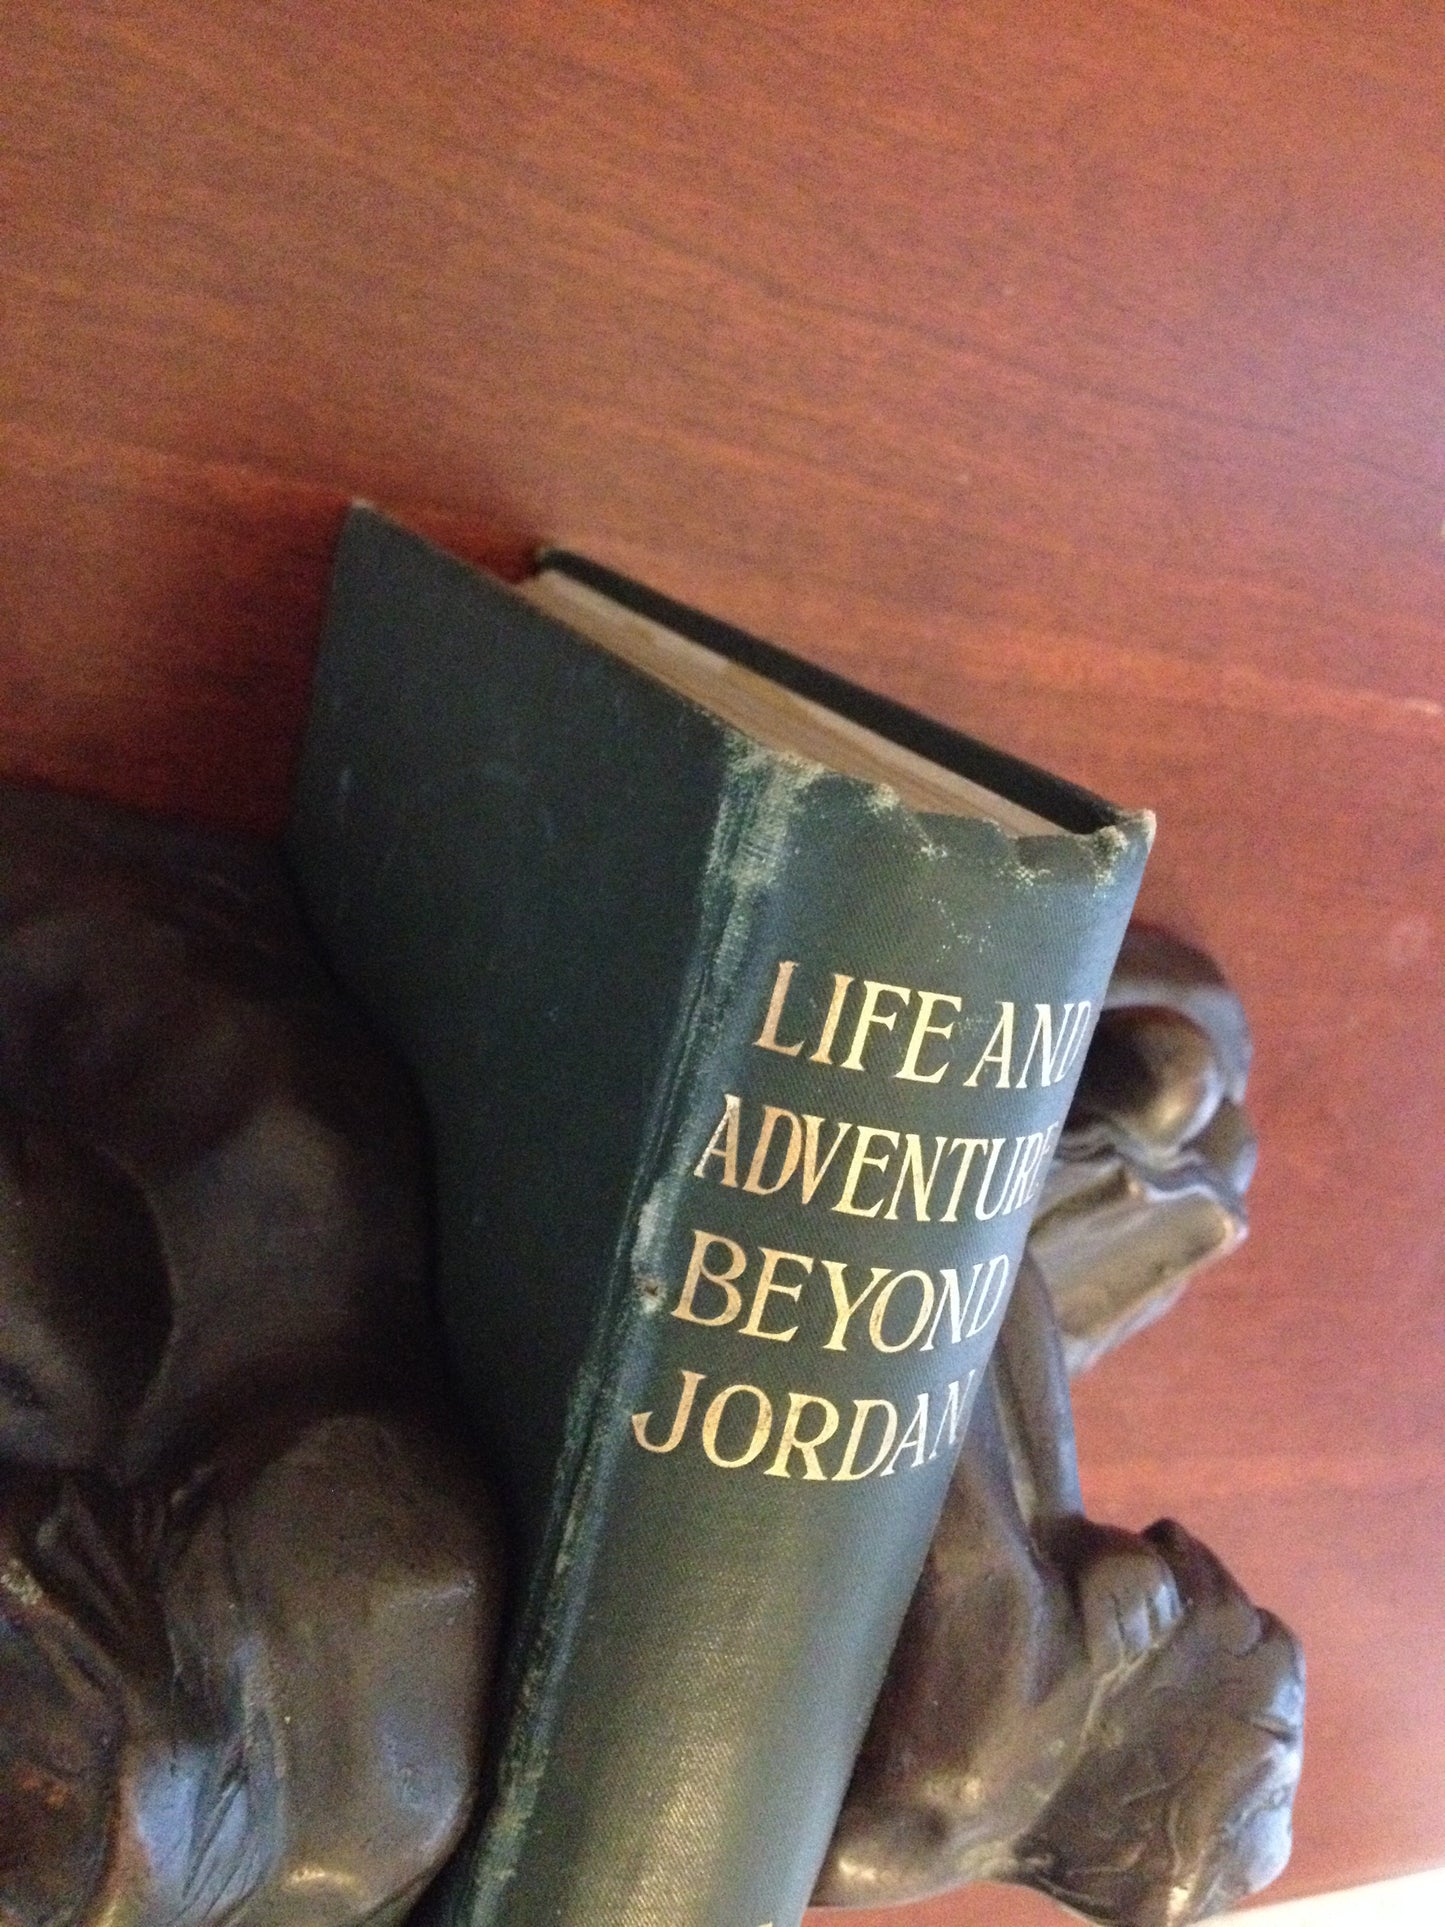 LIFE AND ADVENTURE BEYOND JORDAN  - G. ROBINSON LEES